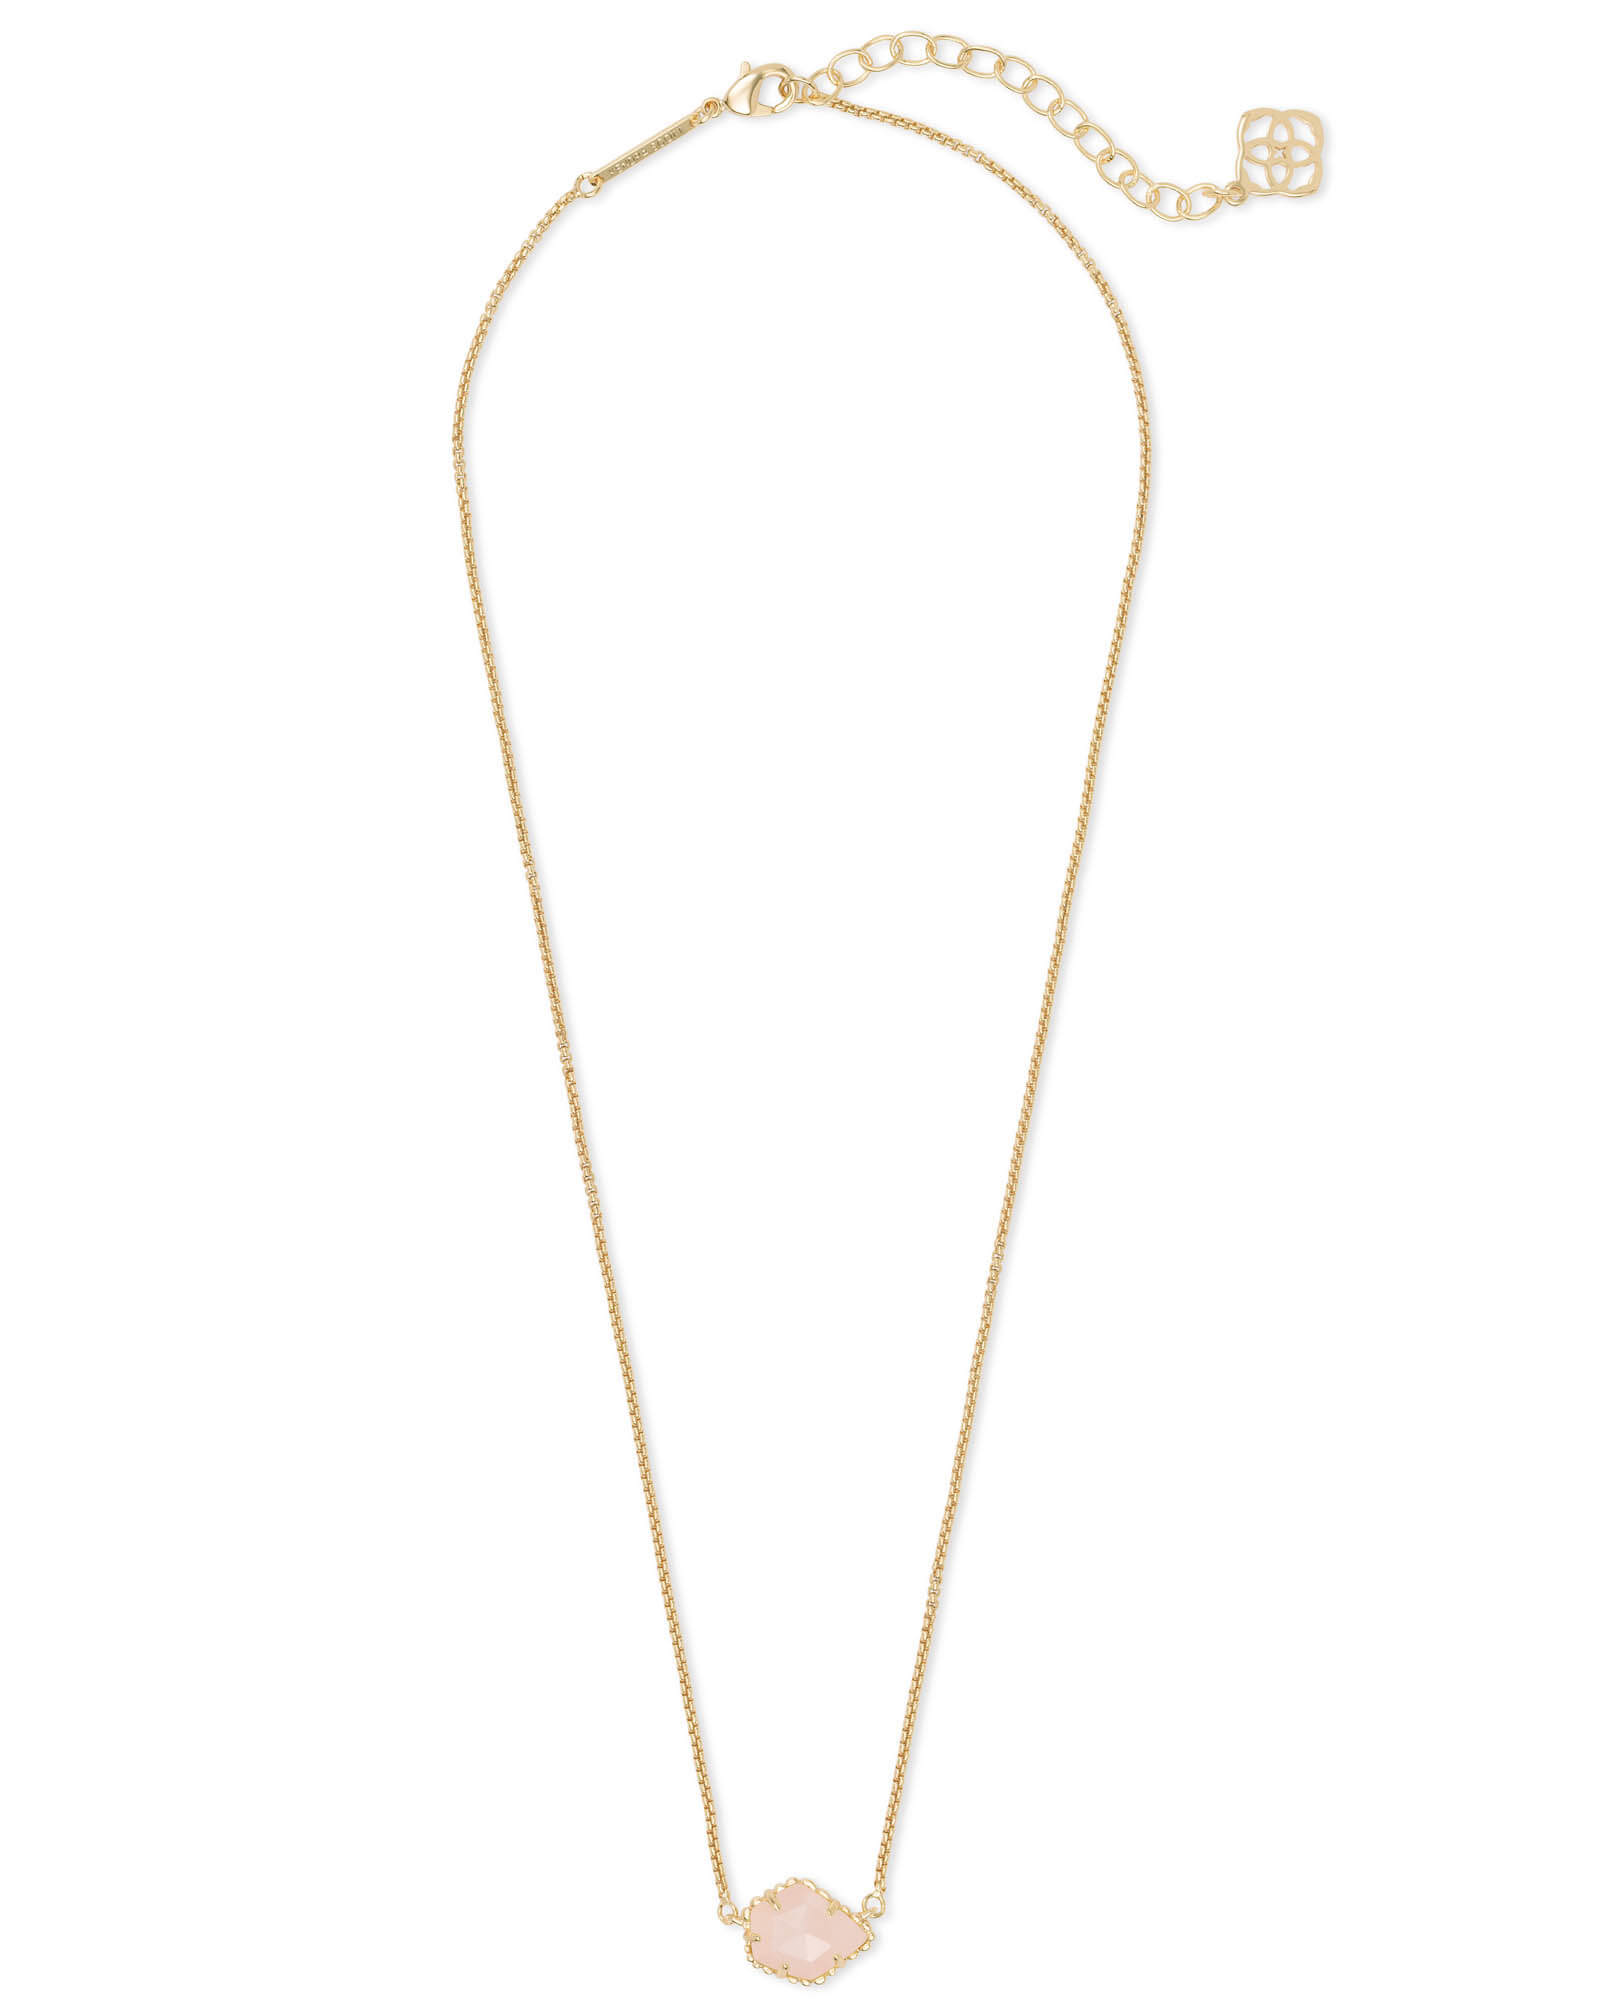 Tess Gold Small Pendant Necklace In Rose Quartz | Kendra Scott